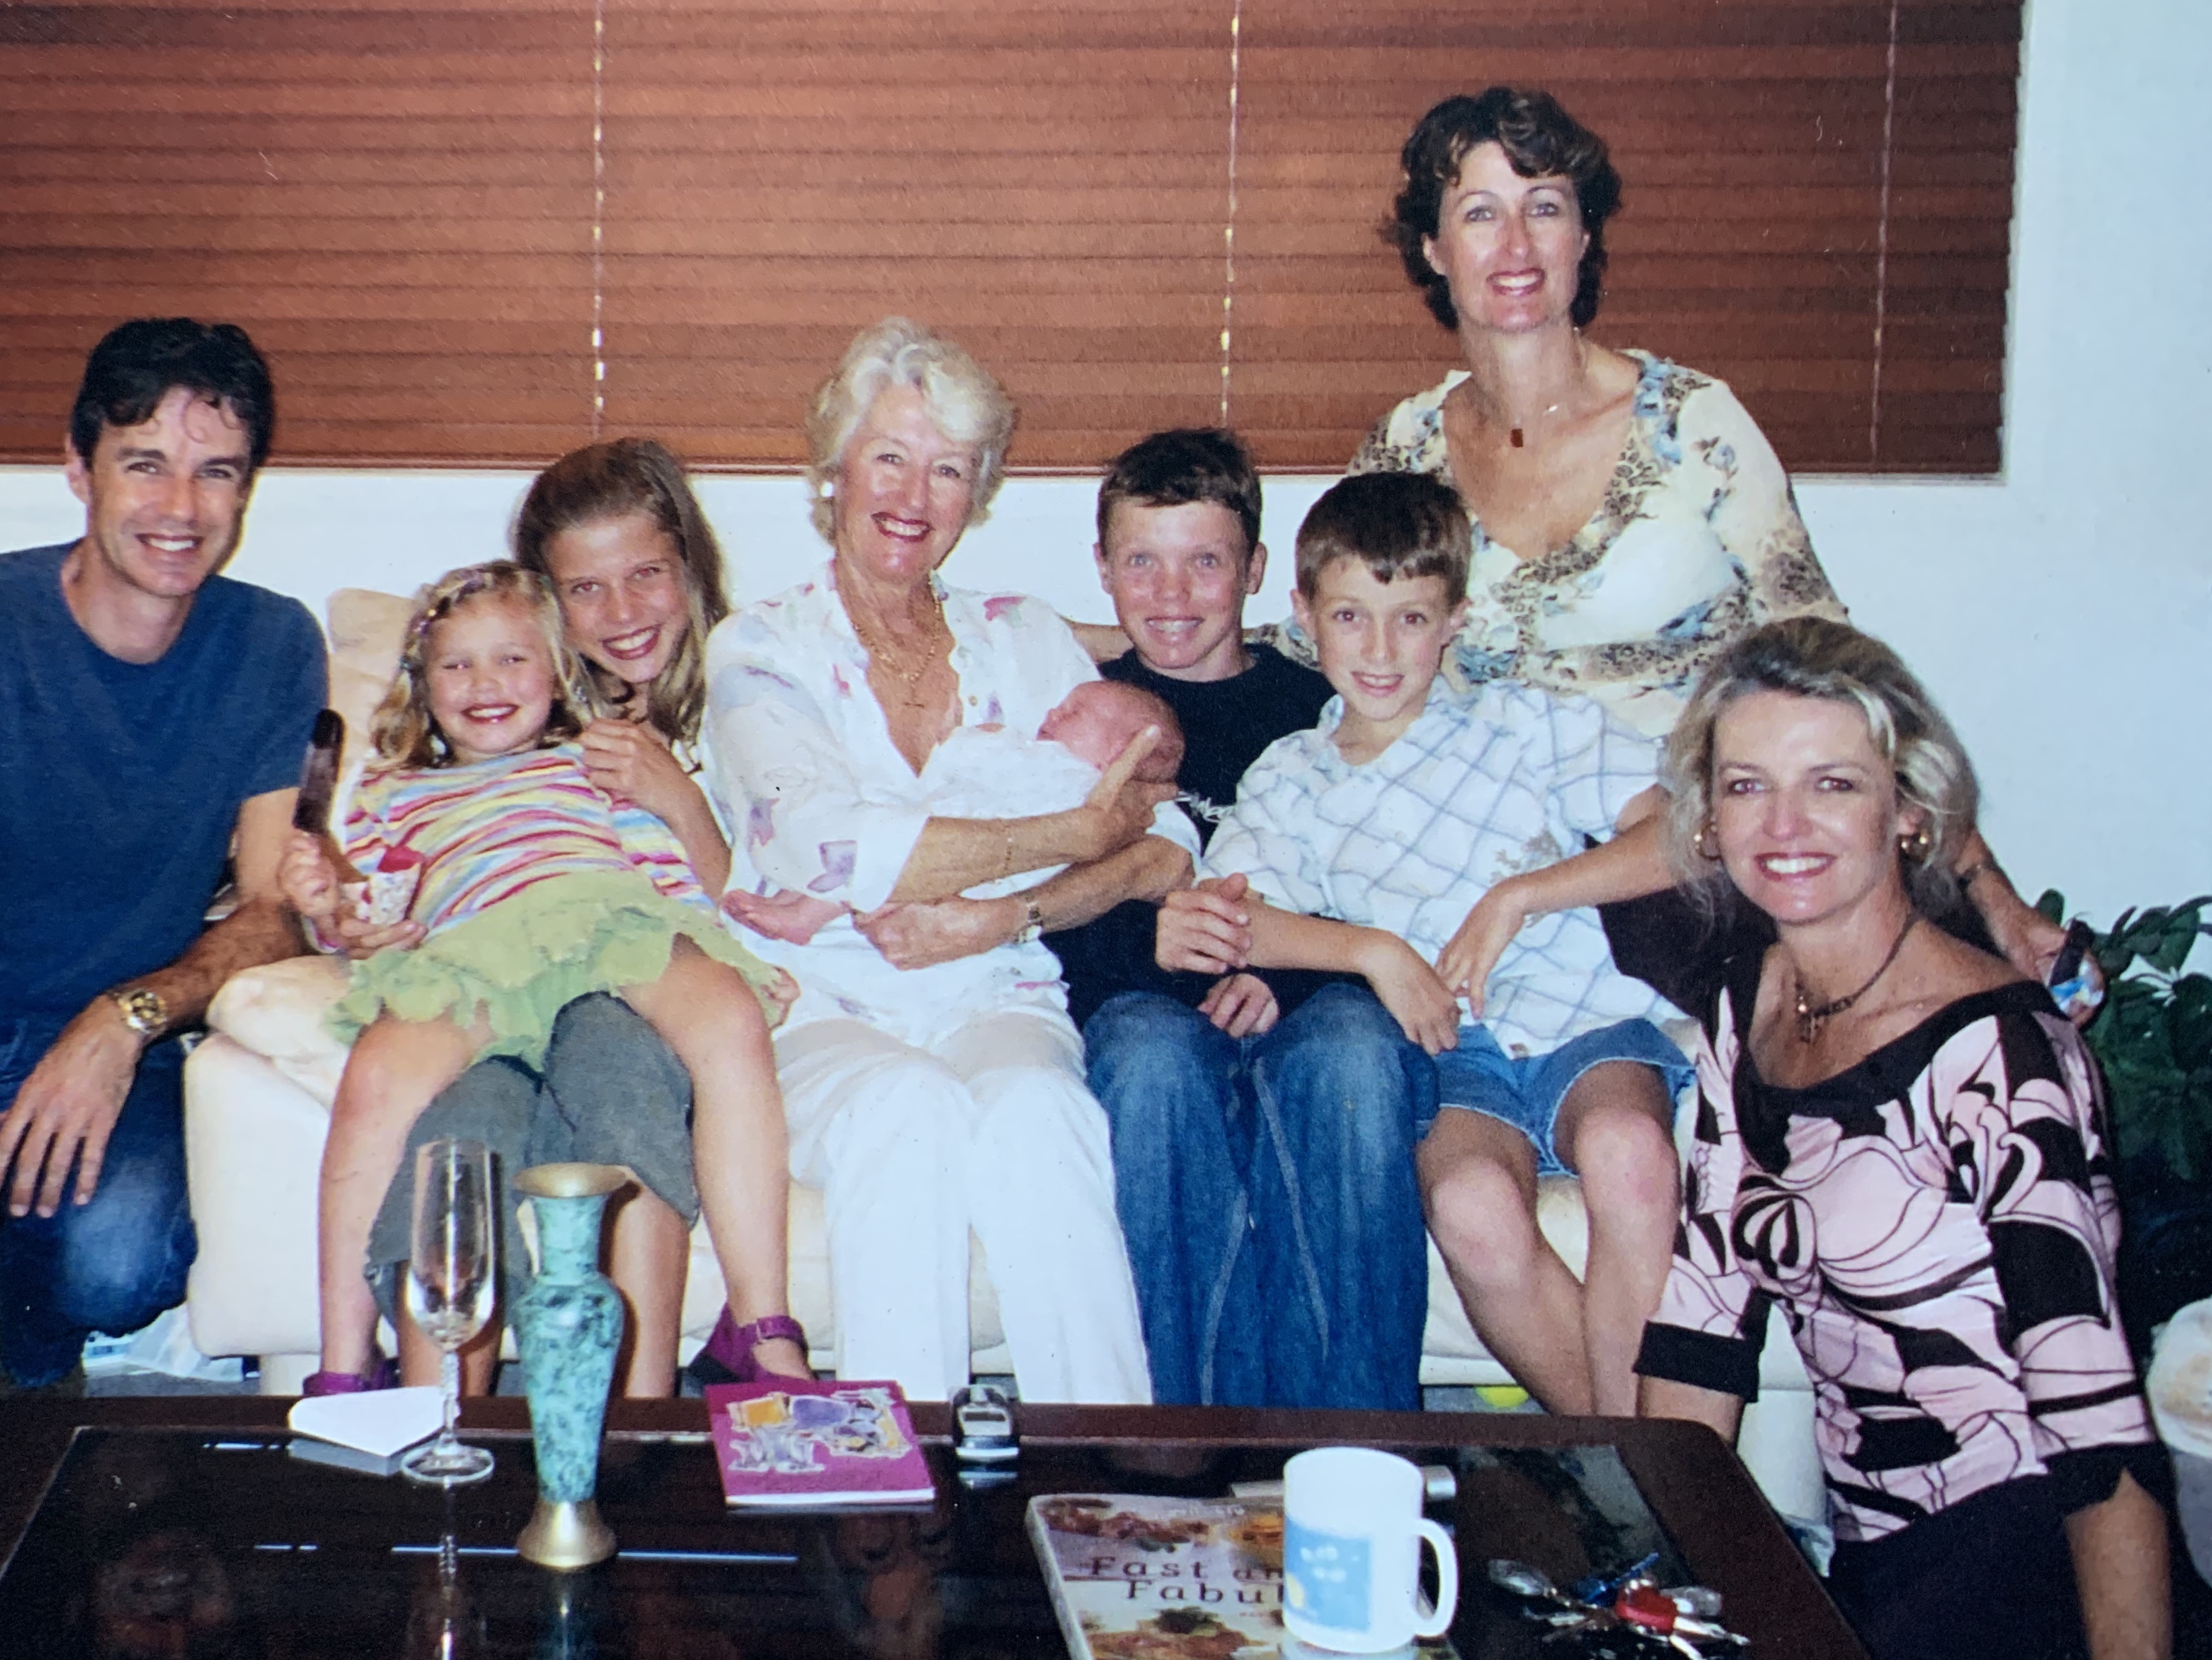 Three generations together - Margaret with her children and grandchildren